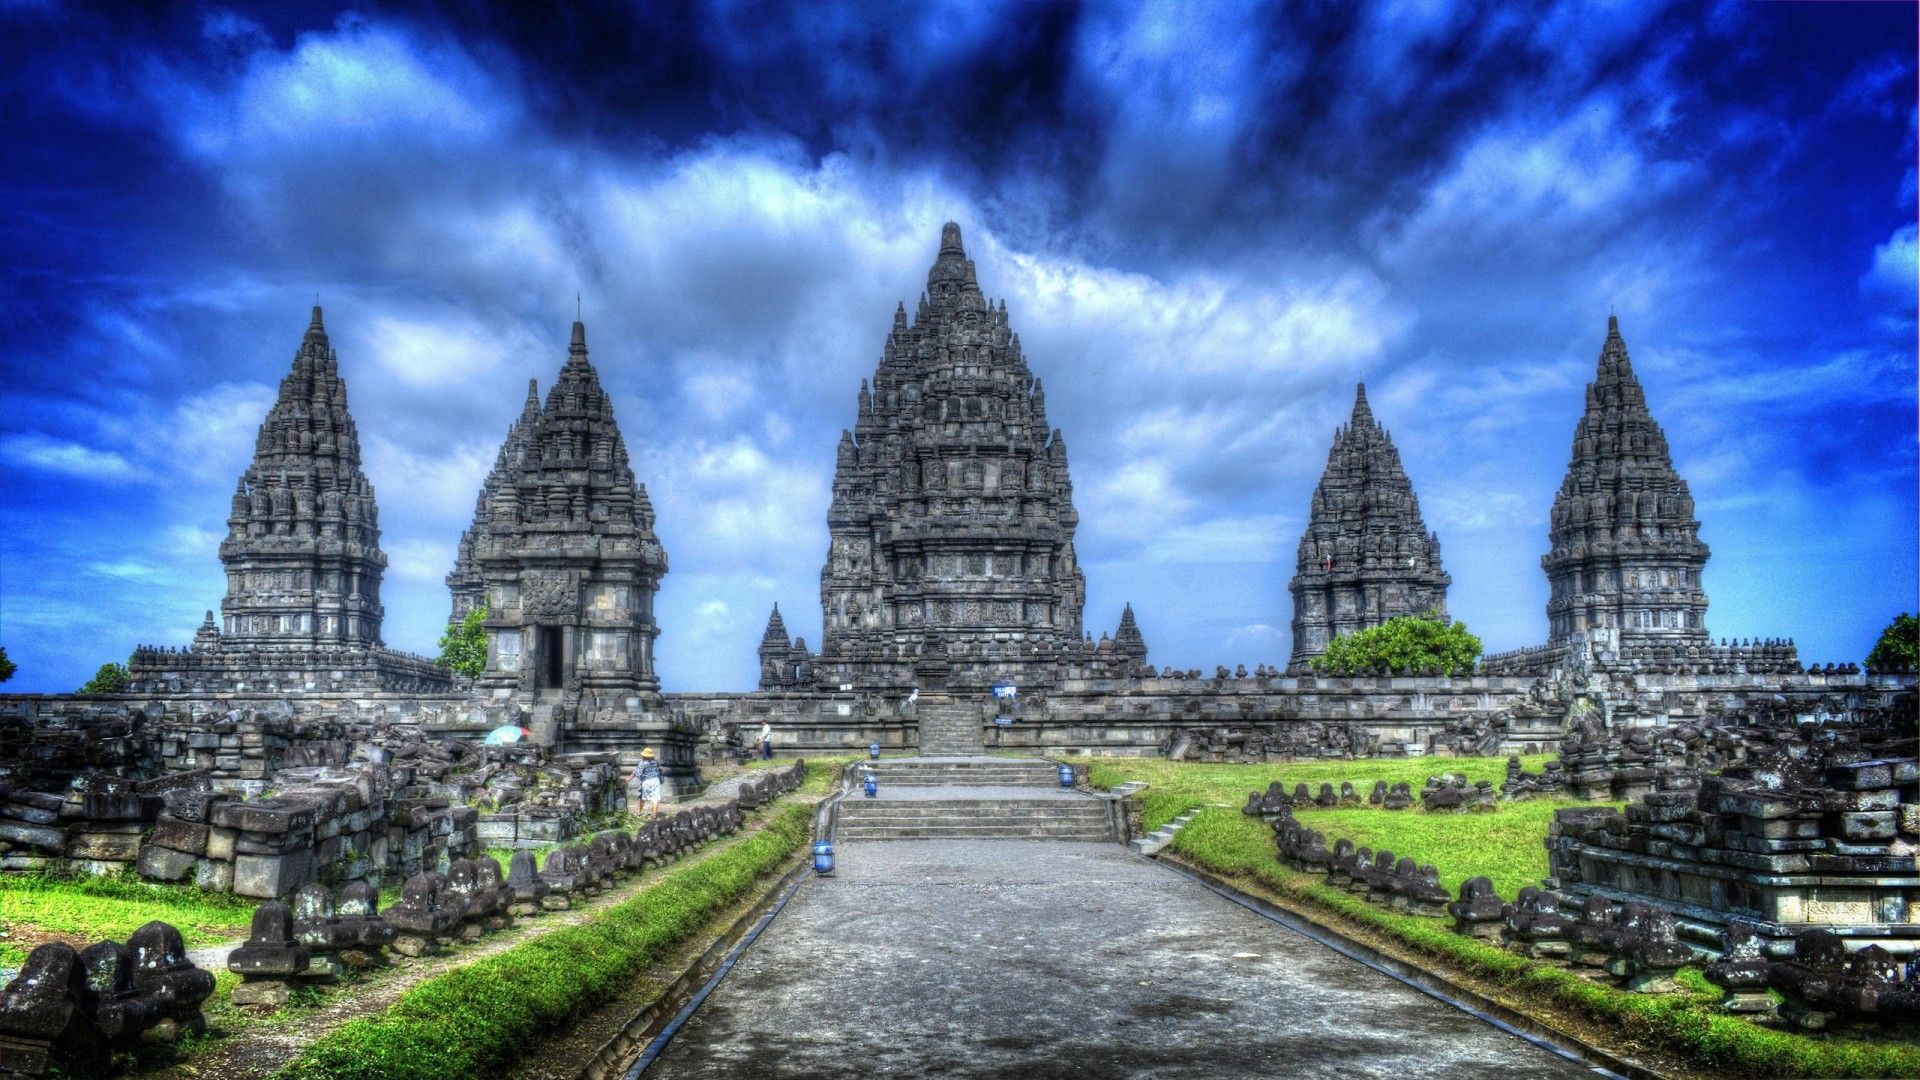 Prambanan Or Candi Rara Jonggrang Is A 9th Century Hindu Temple Compound In Central Java, Indonesia, Dedicated To The Trimurti, T. Wisata Budaya, Borobudur, Candi